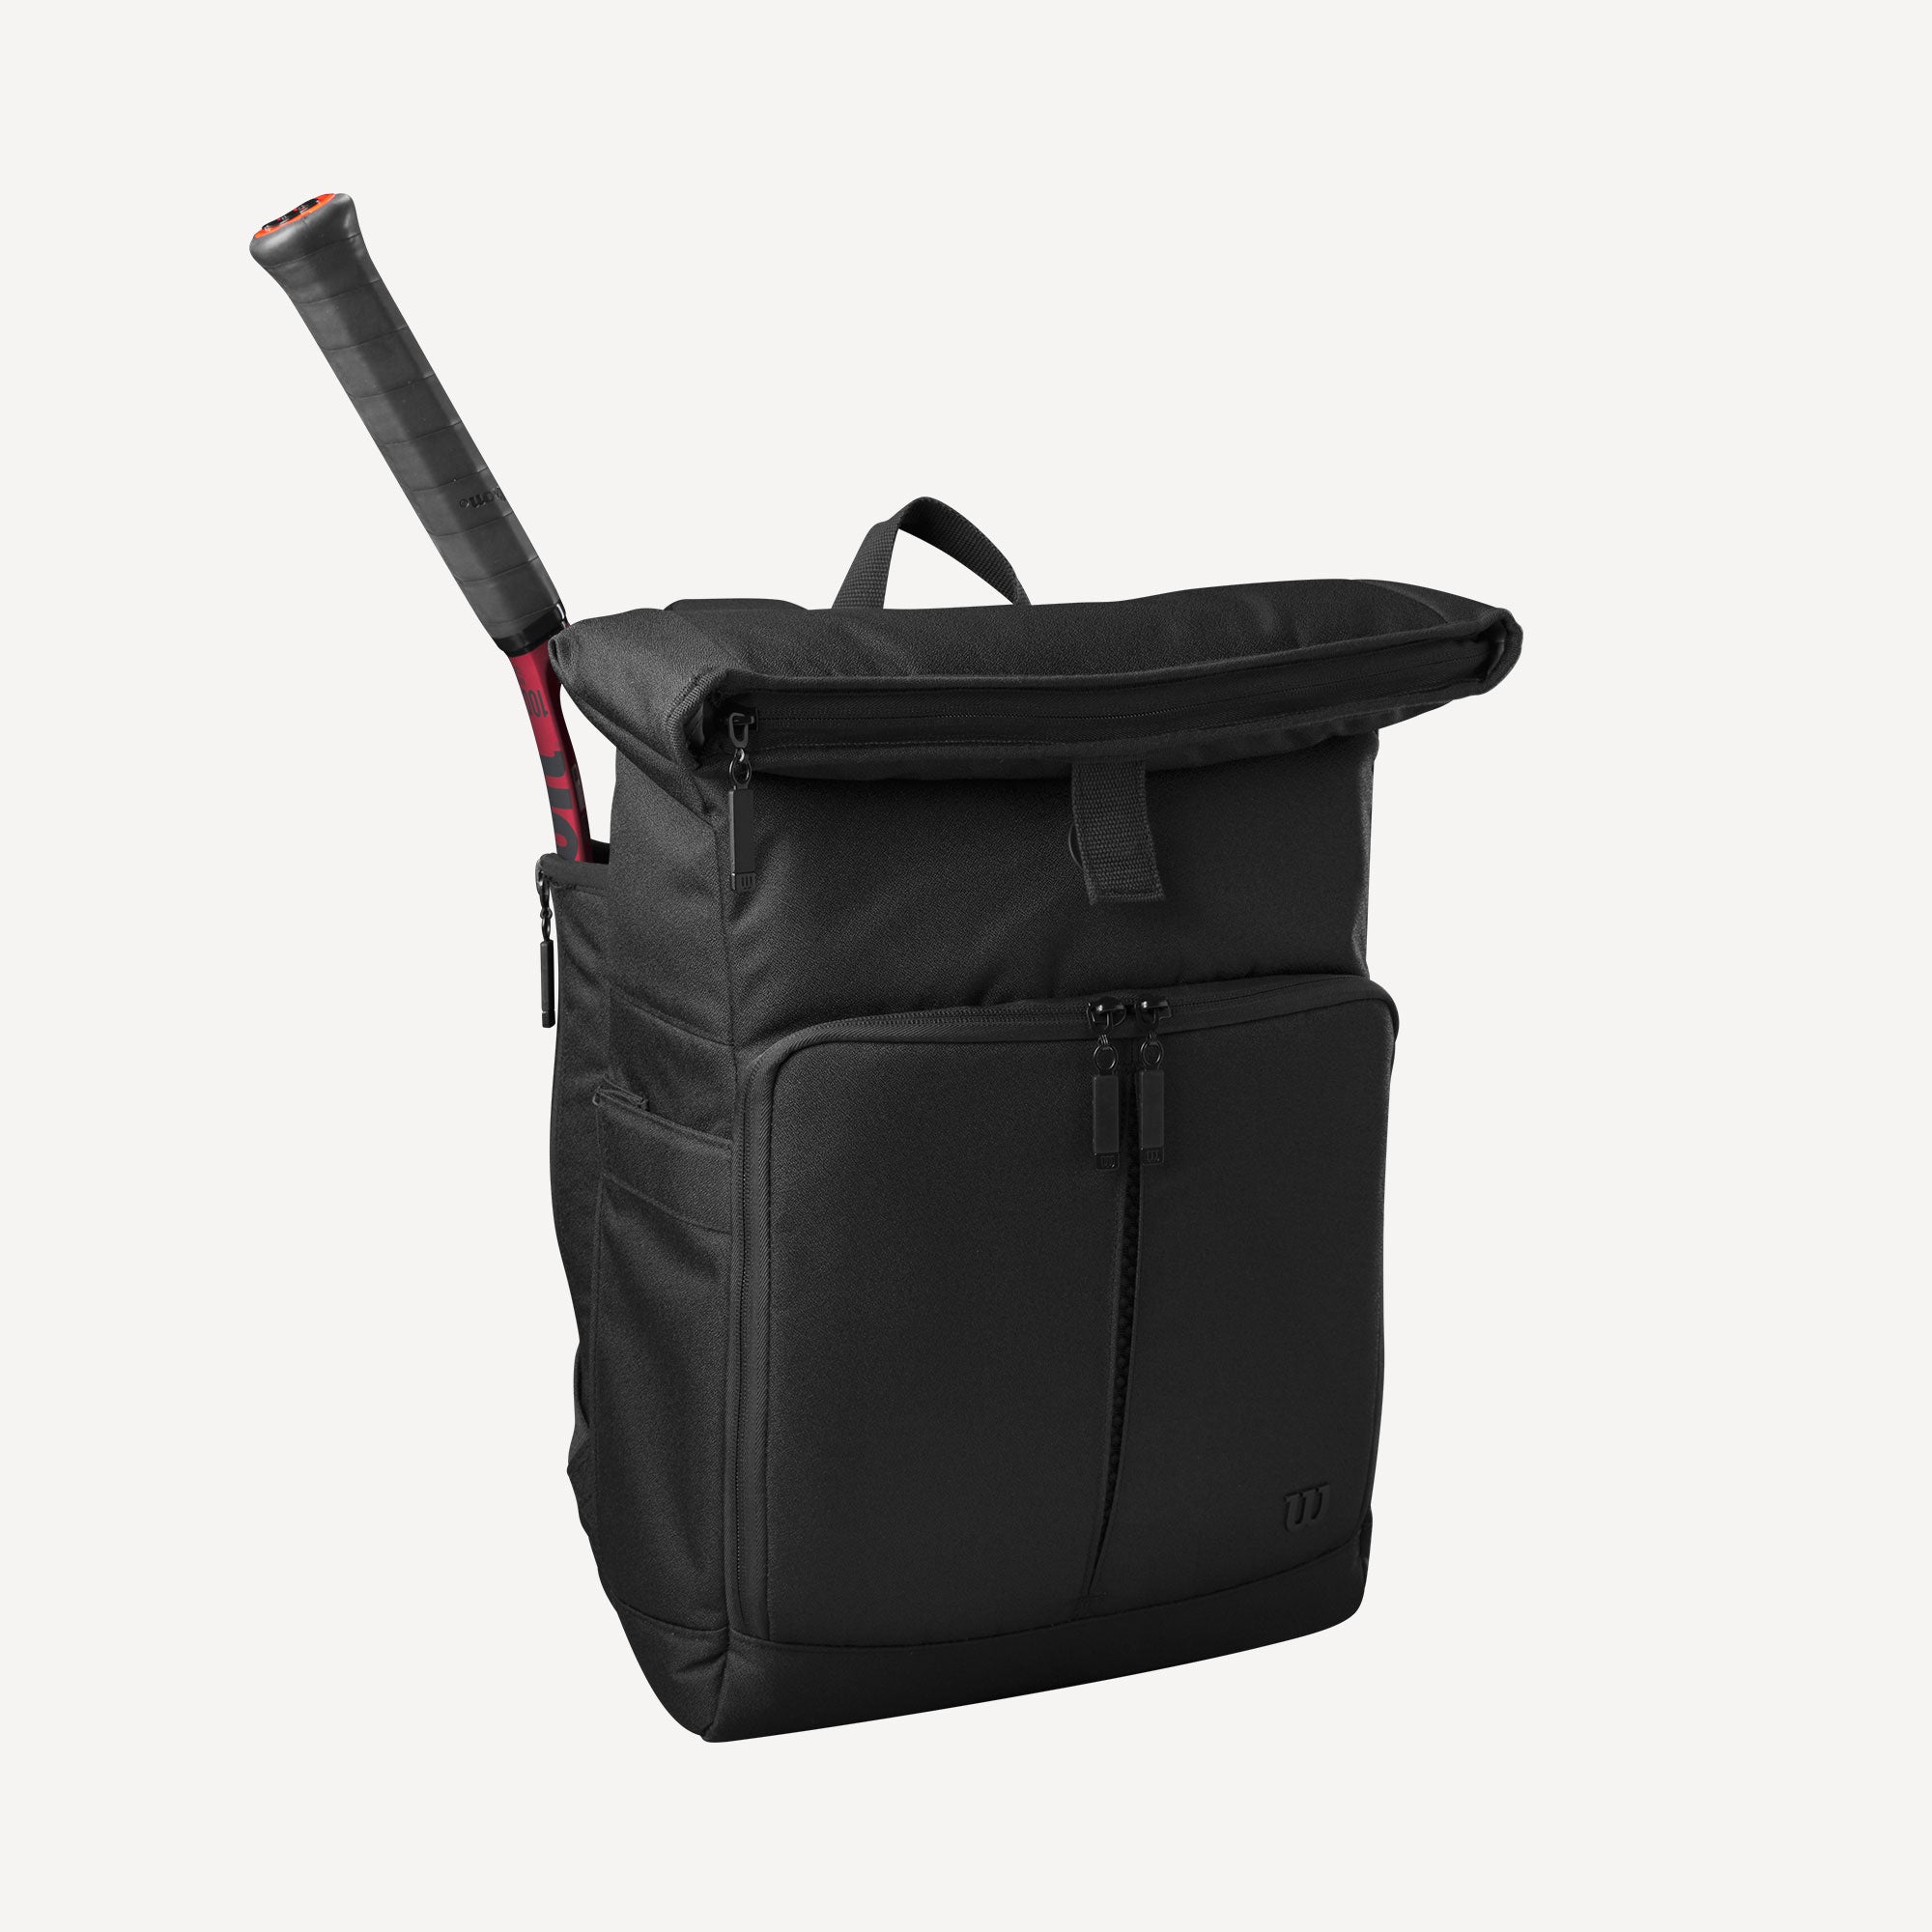 Wilson Lifestyle Foldover Tennis Backpack - Black (2)